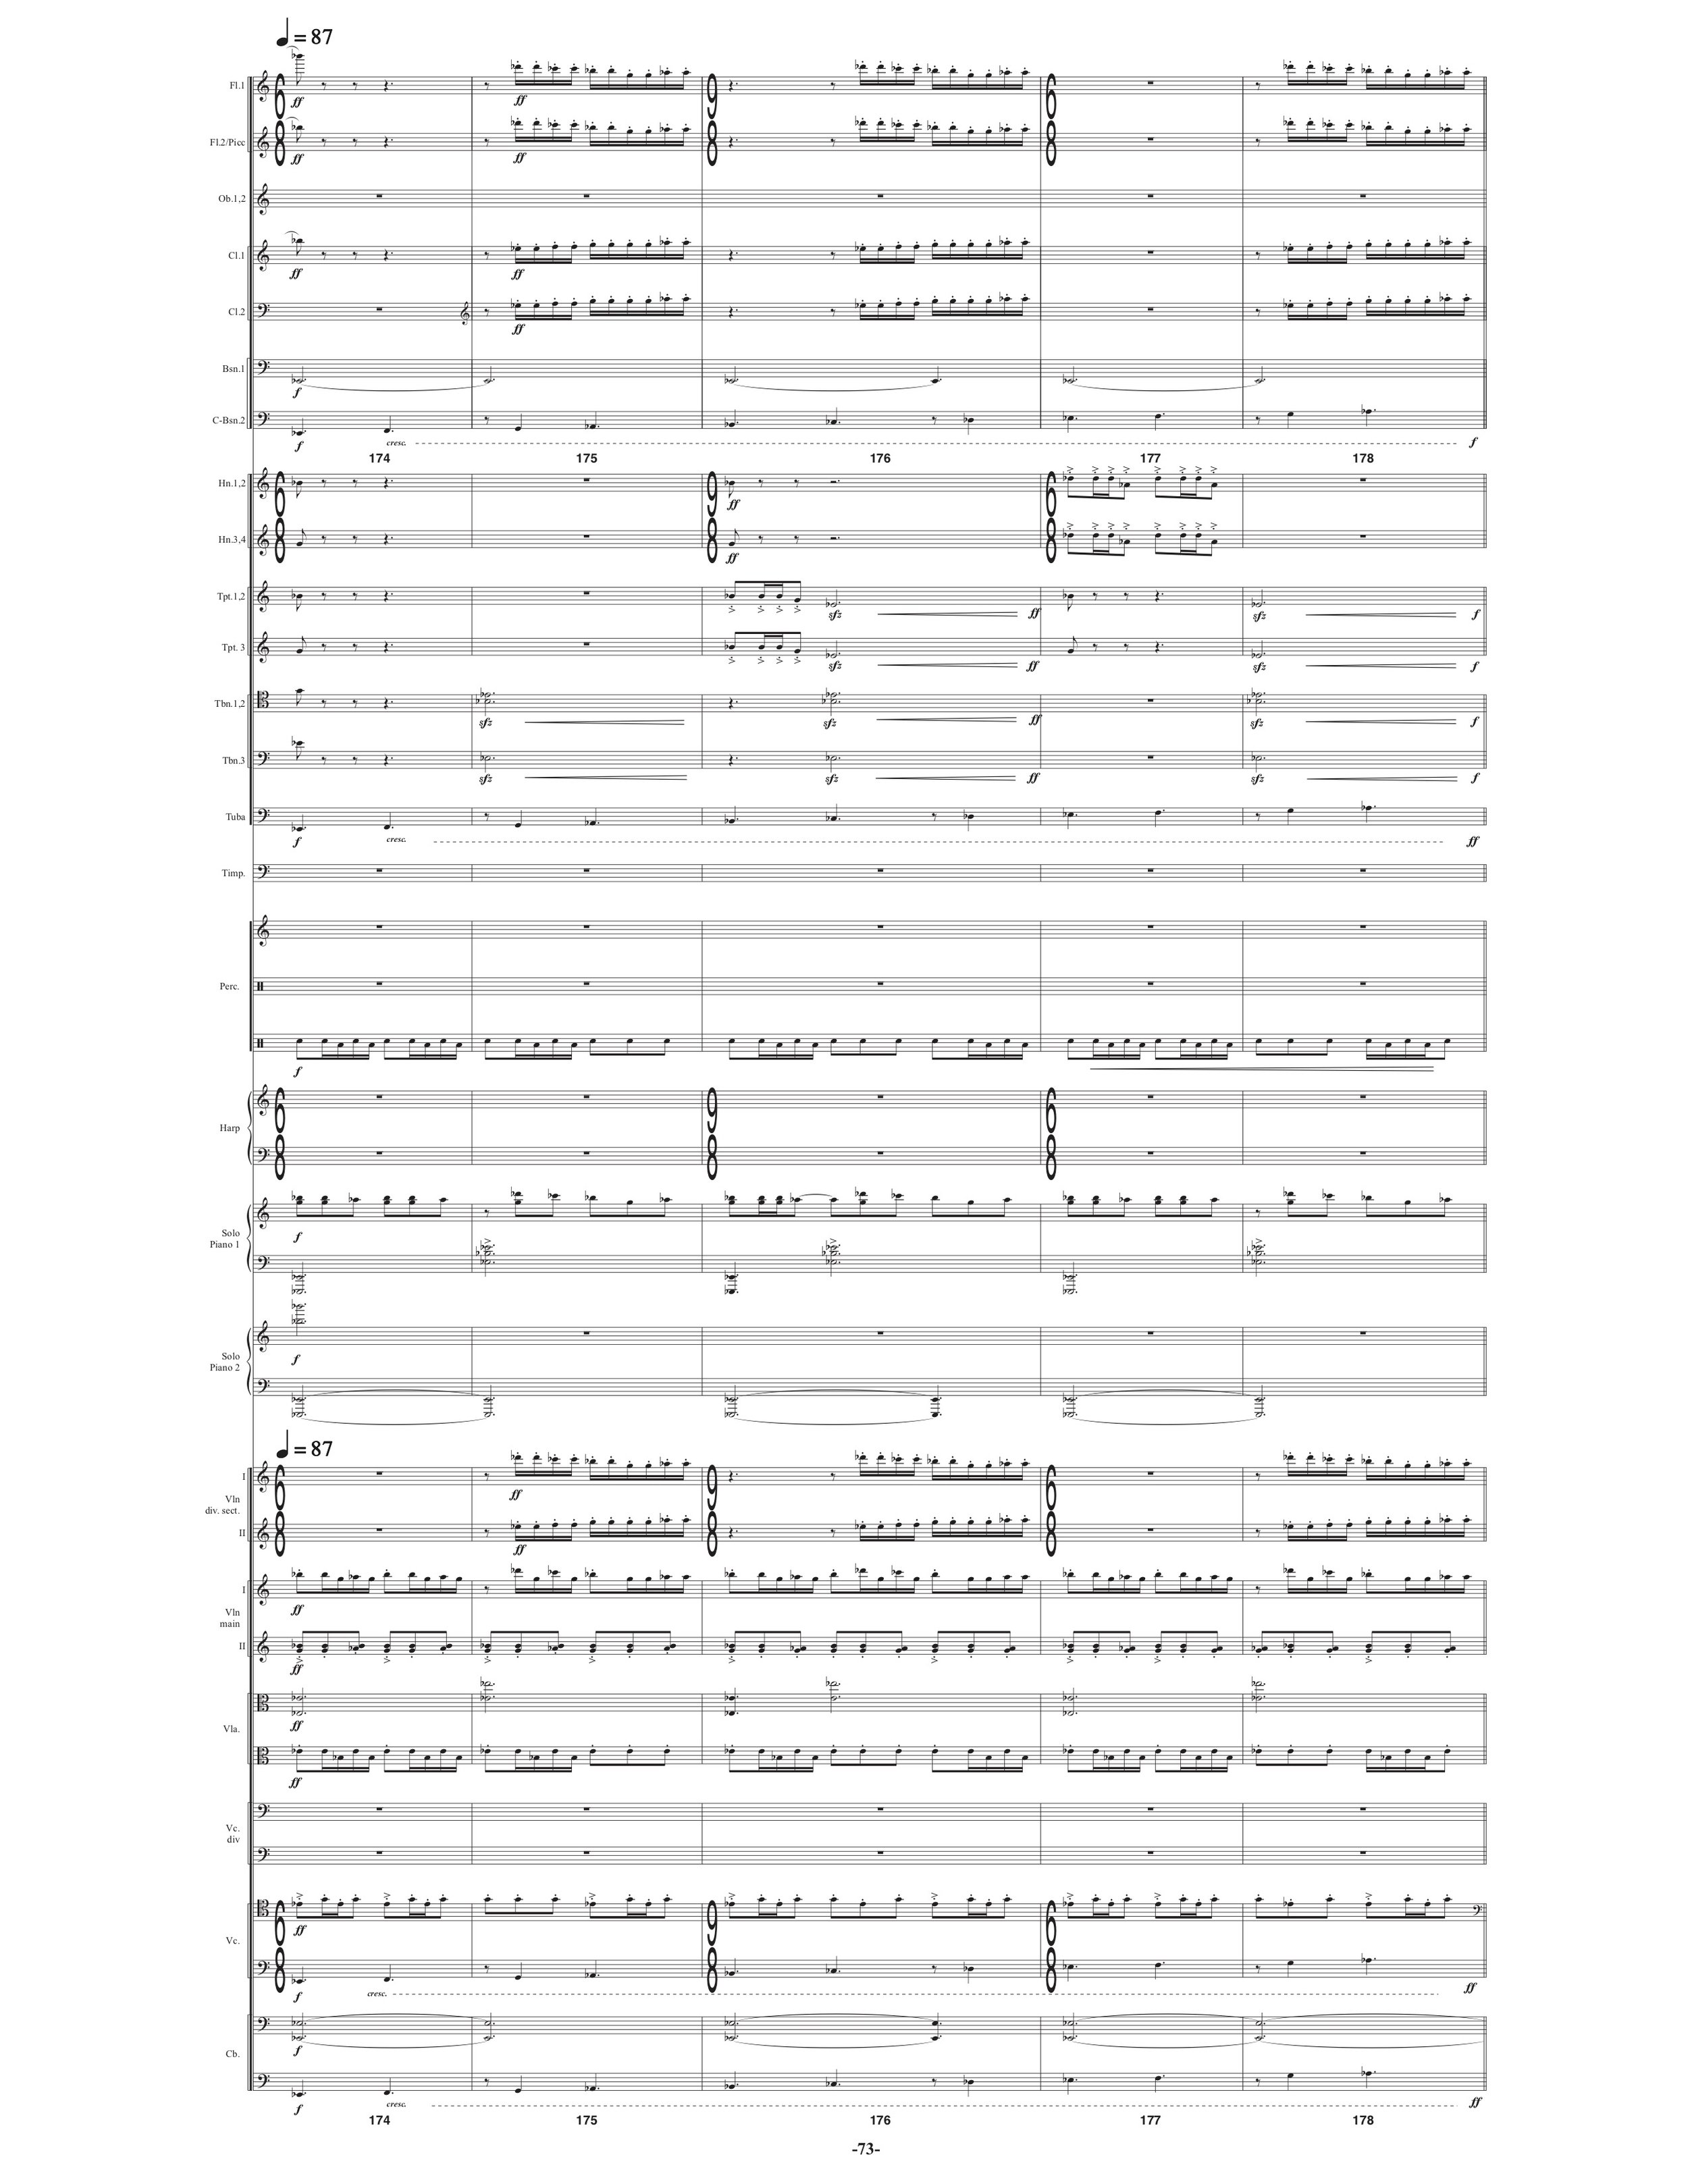 Symphony_Orch & 2 Pianos p78.jpg